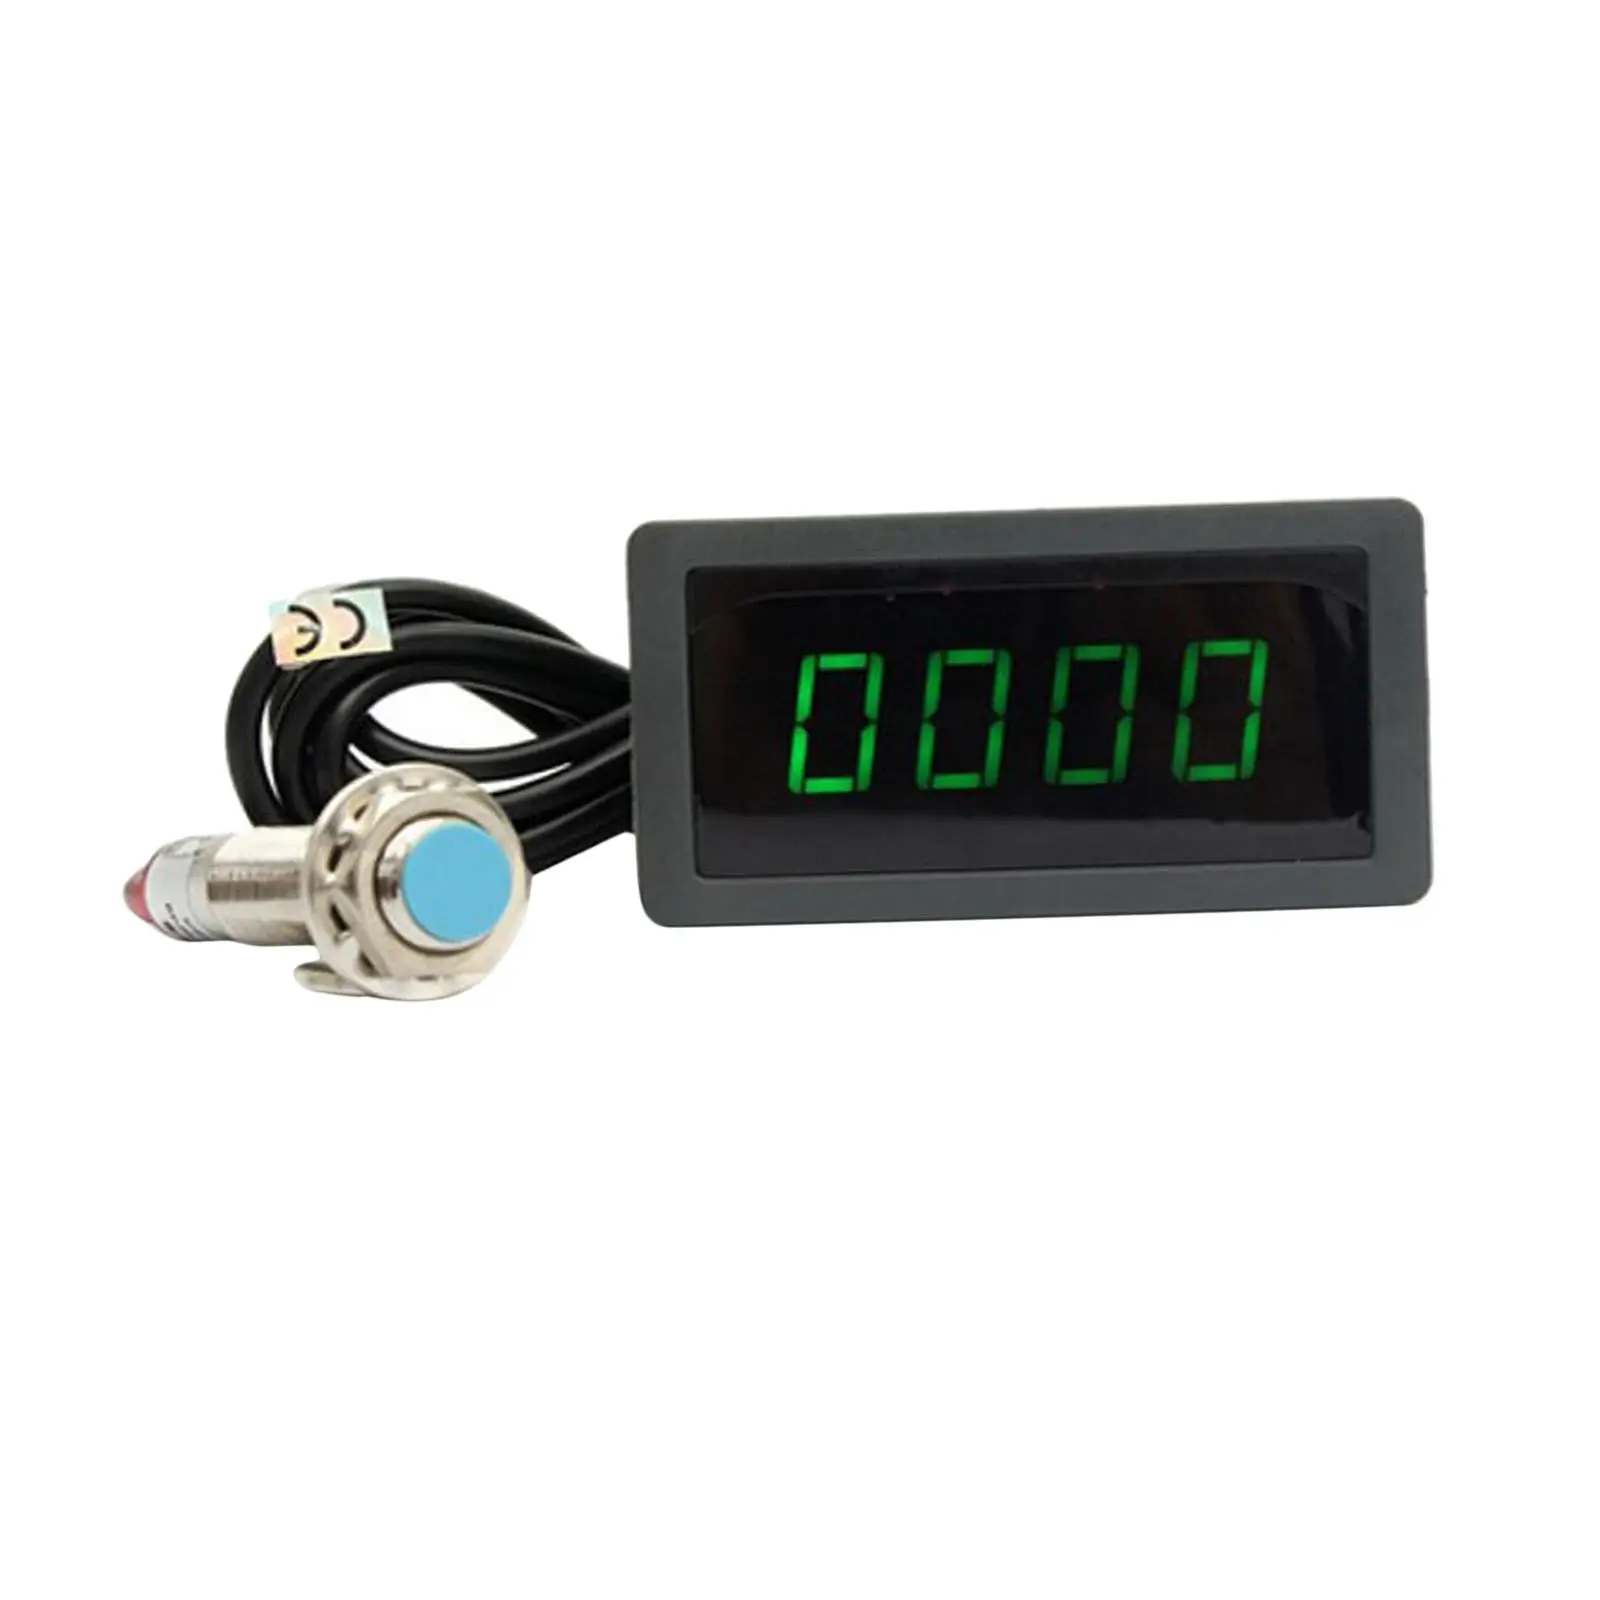 Compact 0.56inch Digital Tachometer RPM Meter LED Tachometer RPM Speed Meter